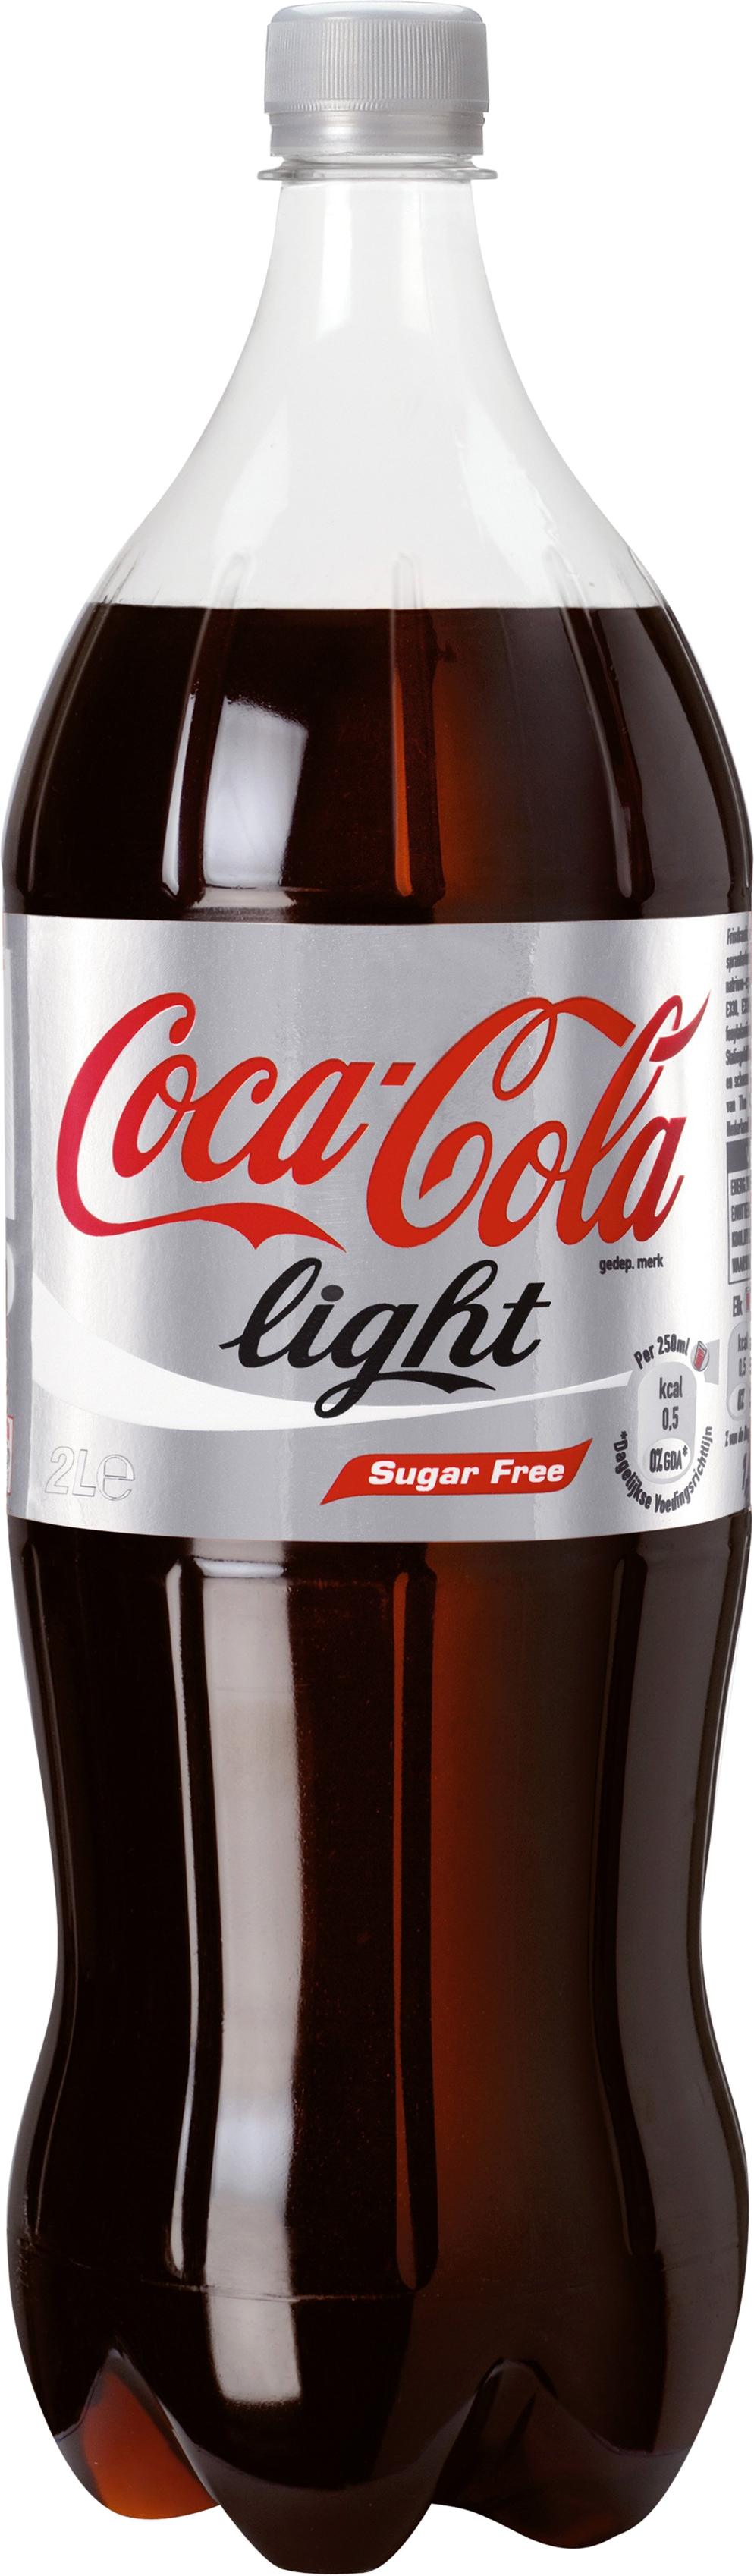 Download Coca Cola Bottle PNG